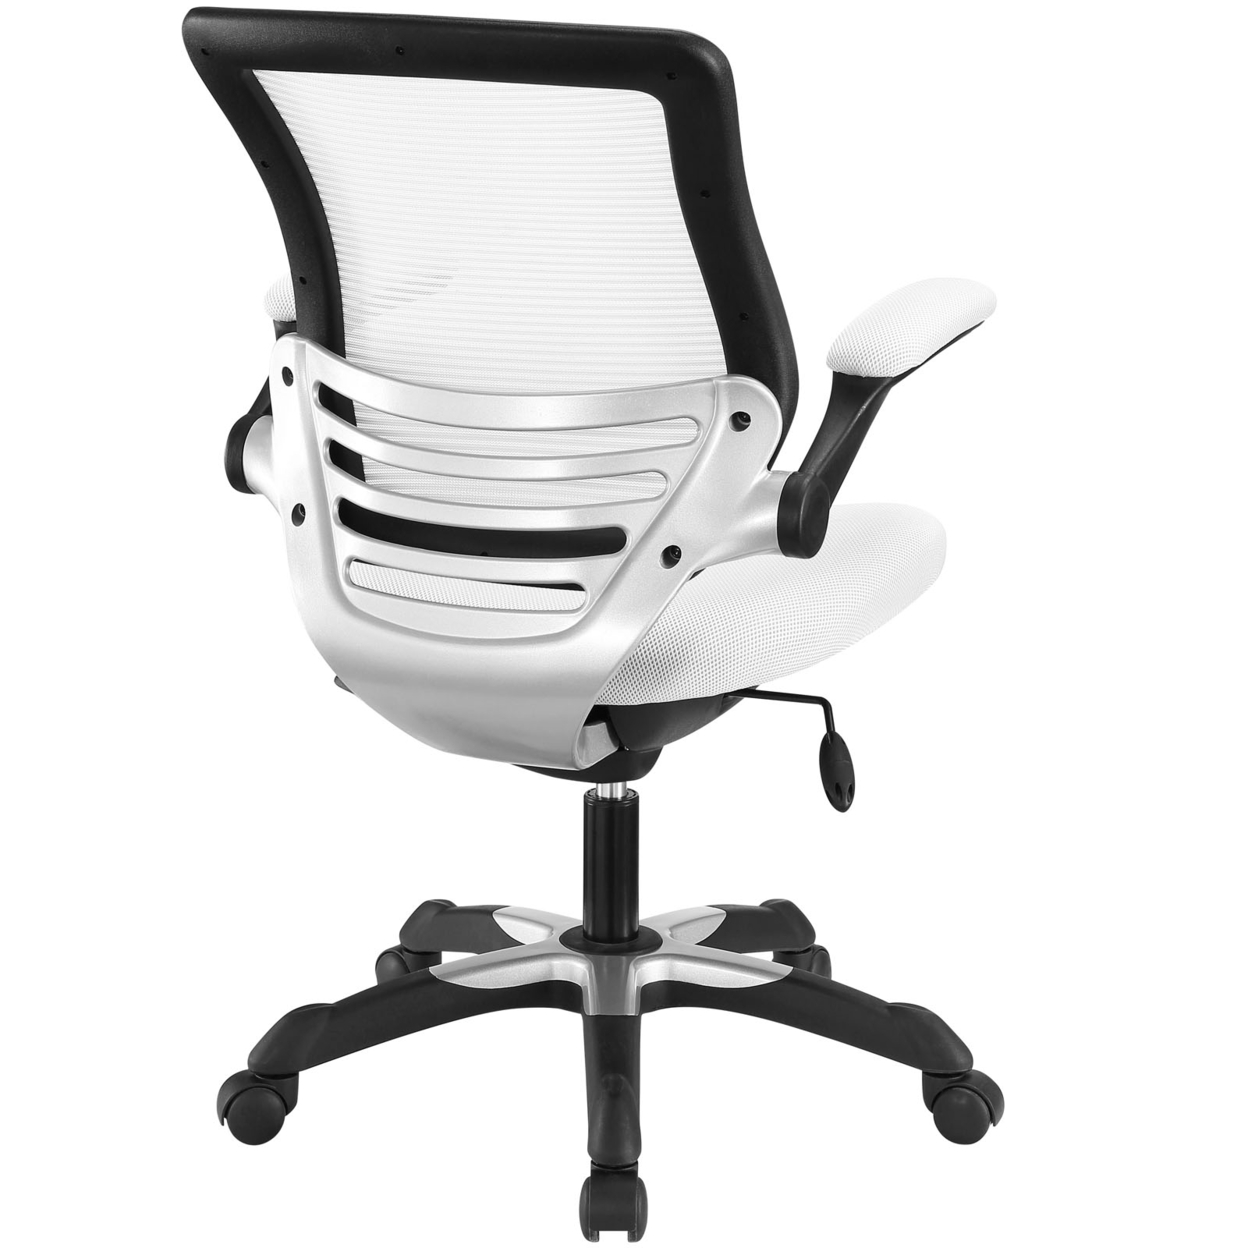 Edge Mesh Office Chair EEI-594-WHI - image 4 of 4